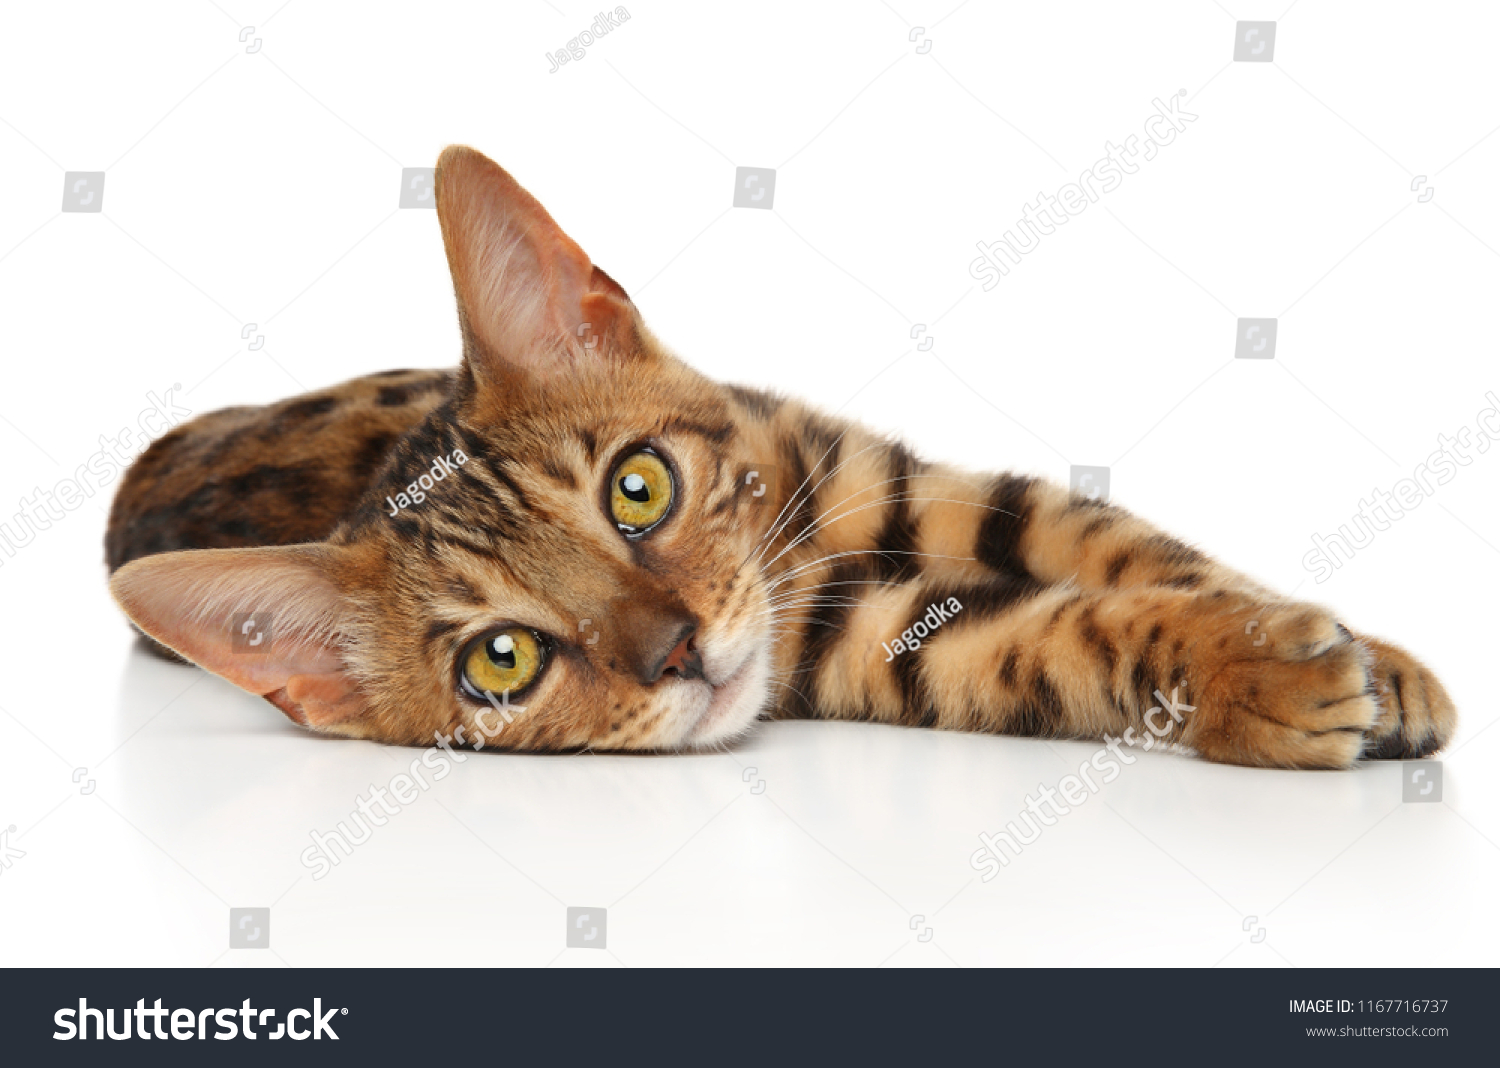 Bengal kitten resting on white background. Baby animal theme #1167716737